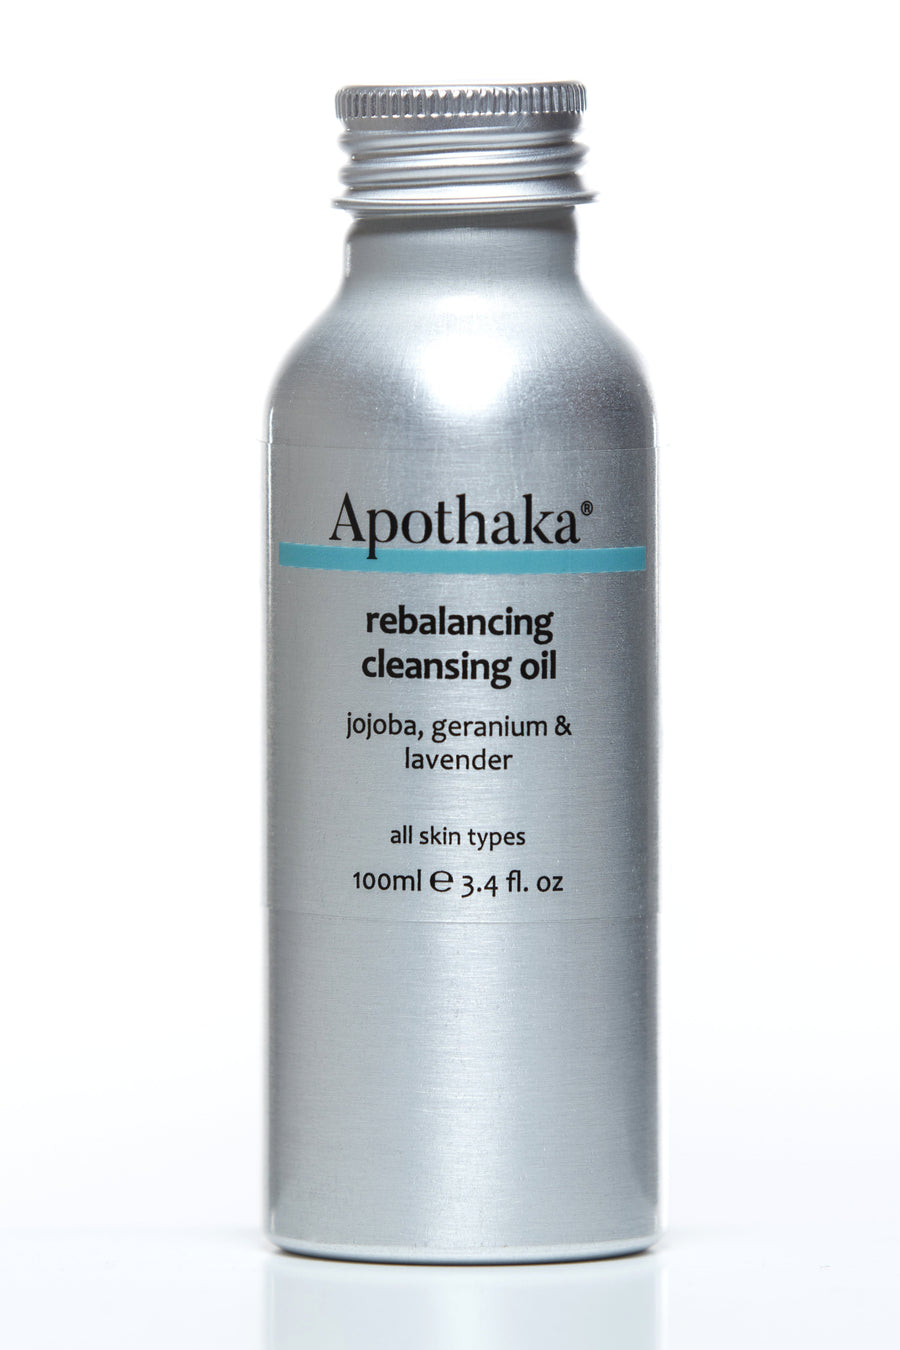 Apothaka rebalancing cleansing oil - refill